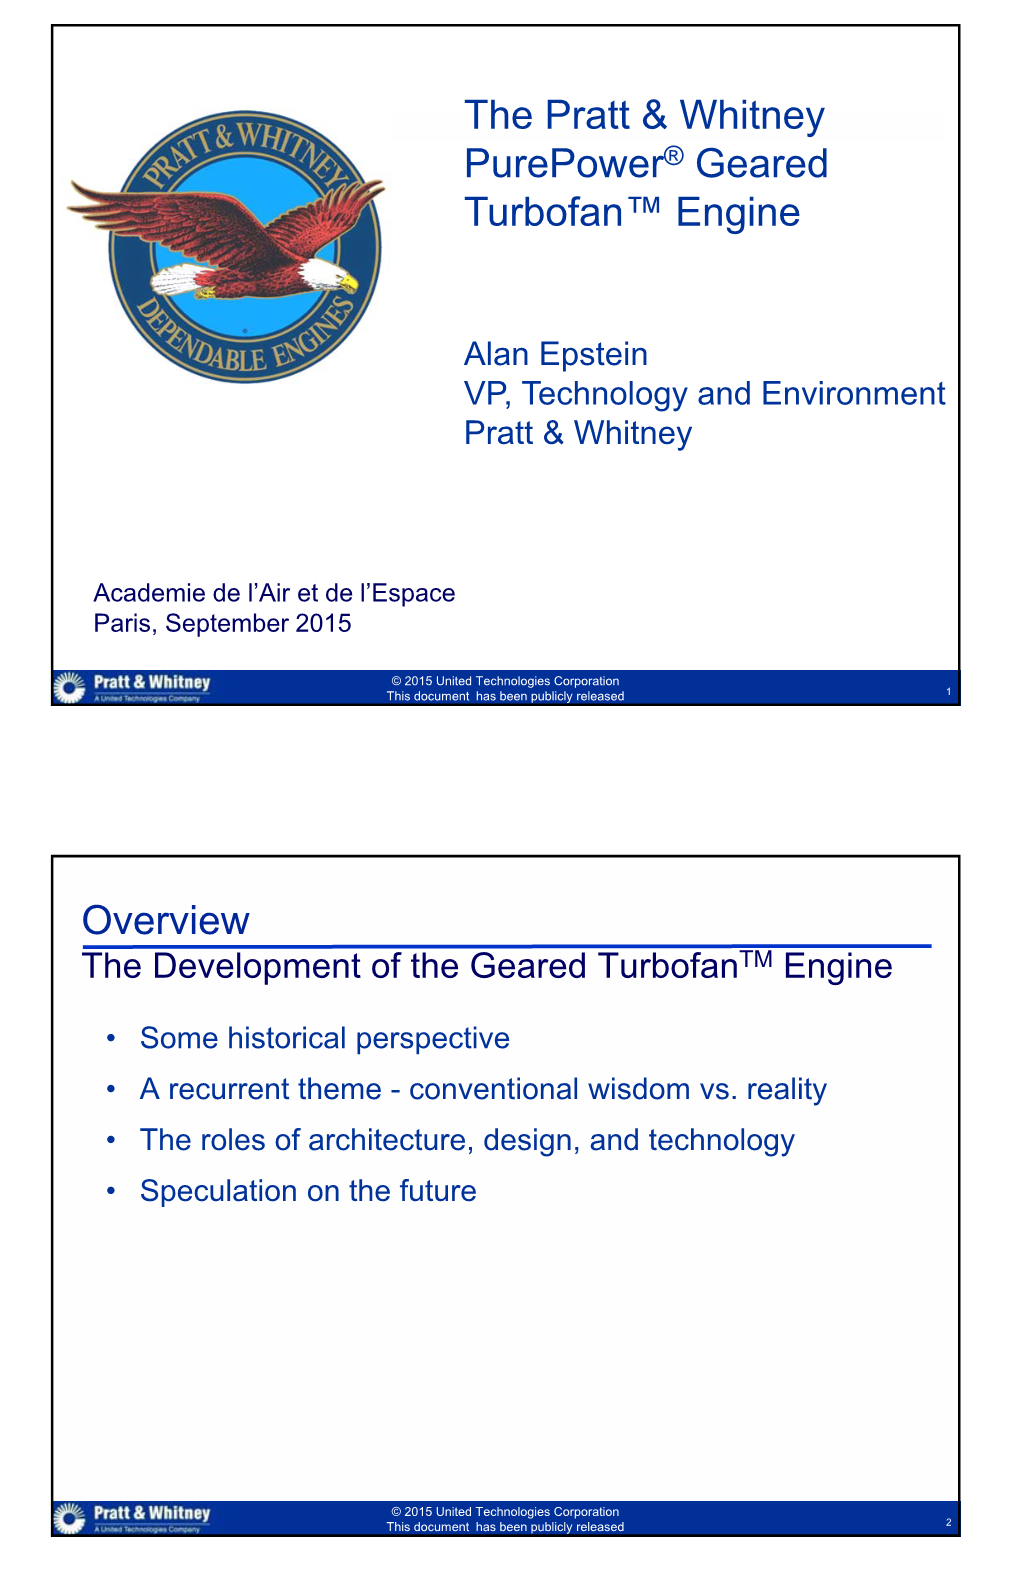 The Pratt & Whitney Purepower® Geared Turbofan™ Engine Overview